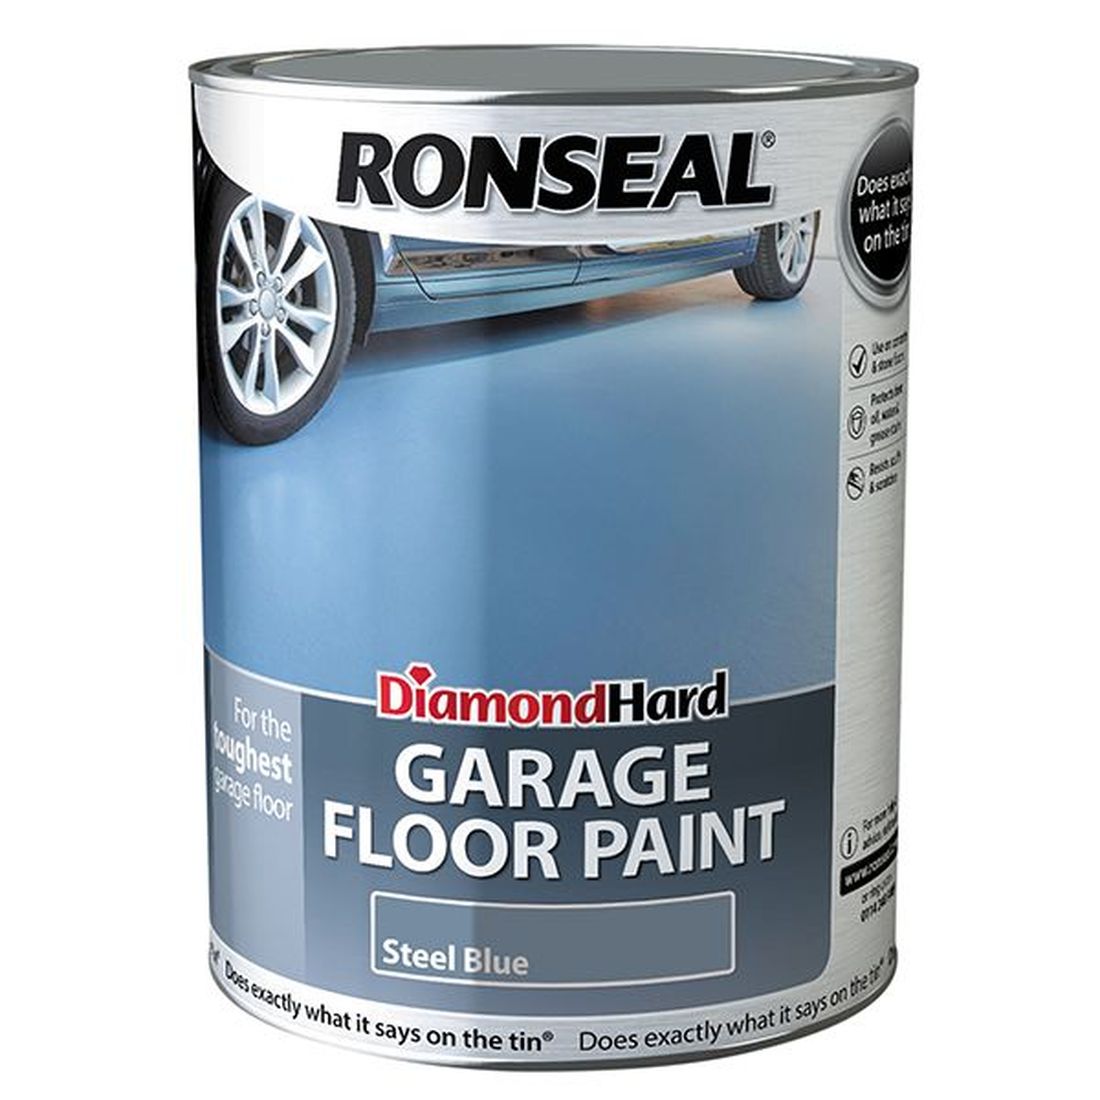 Ronseal Diamond Hard Garage Floor Paint Steel Blue 5 litre                              